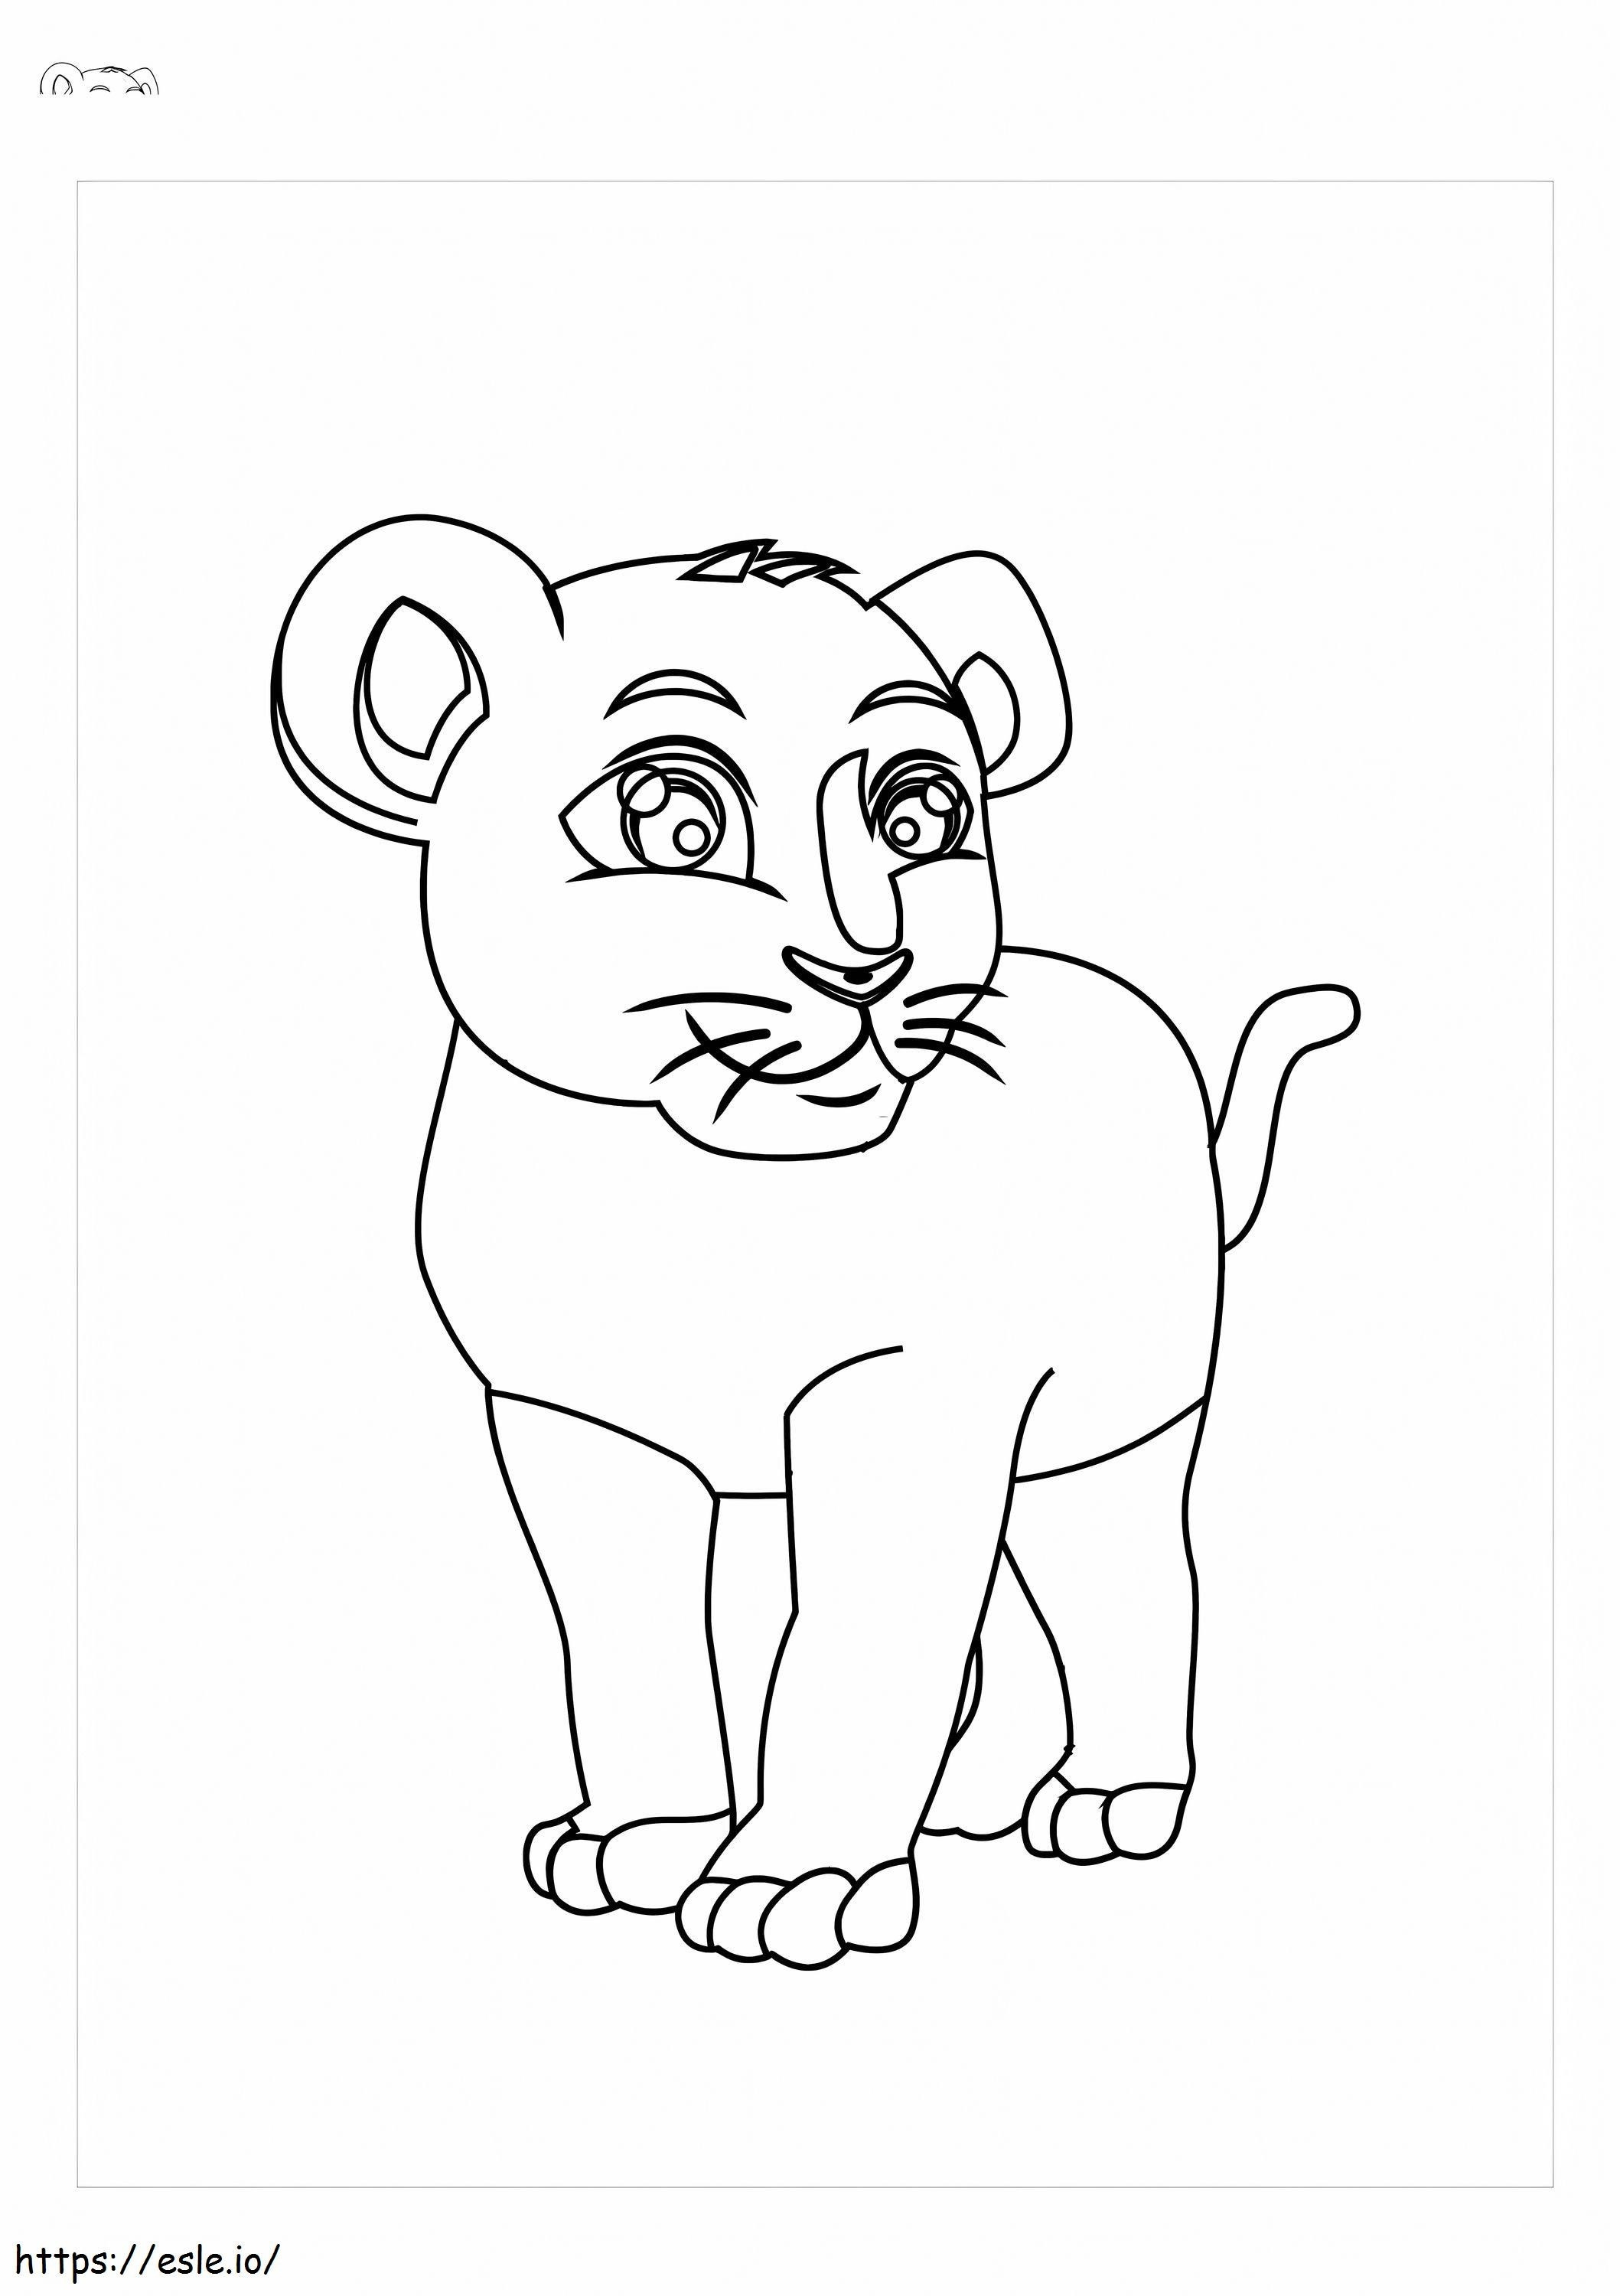 Baby Puma coloring page